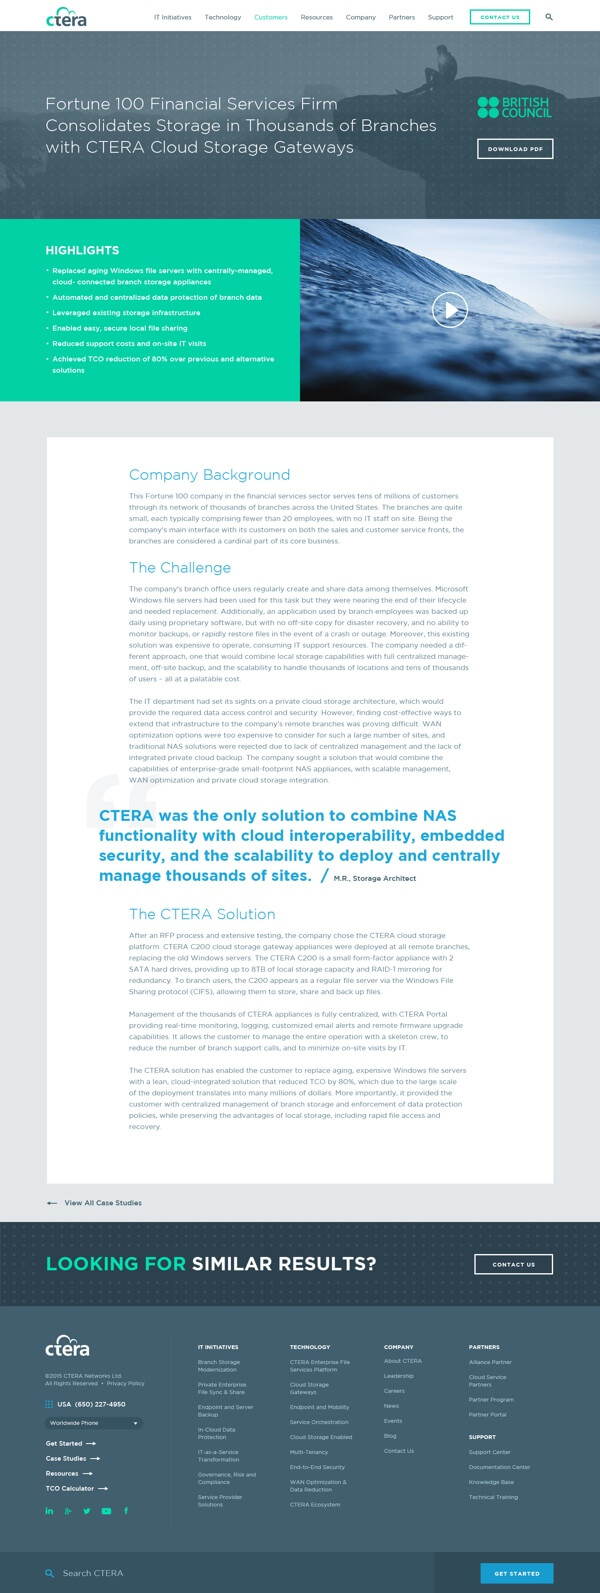 Screenshot of CTERA website - Blog post page